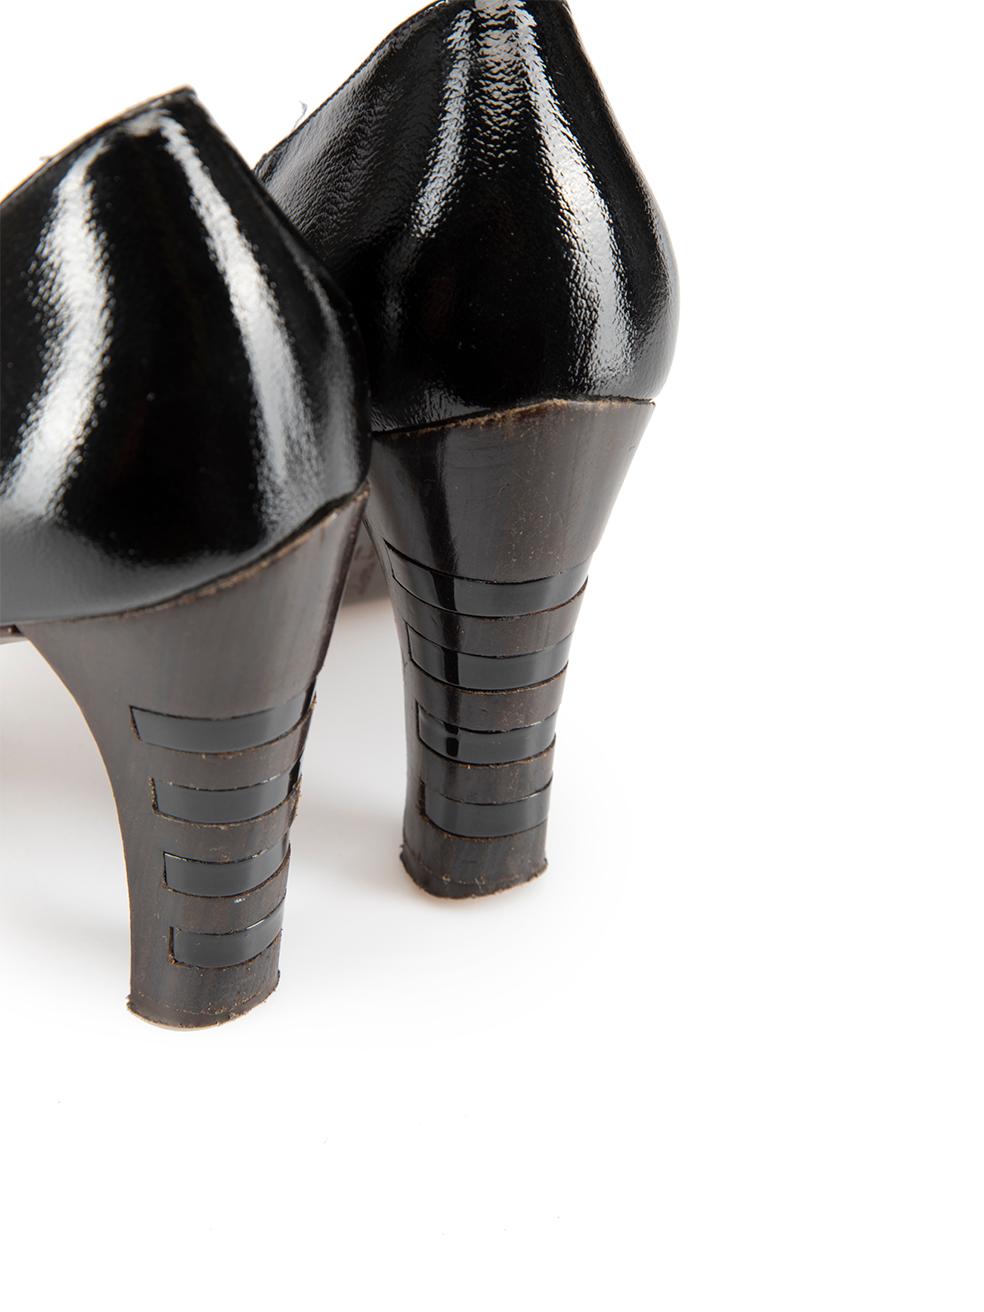 Salvatore Ferragamo Black Patent Leather Wooden Heel Pumps Size US 8 For Sale 1